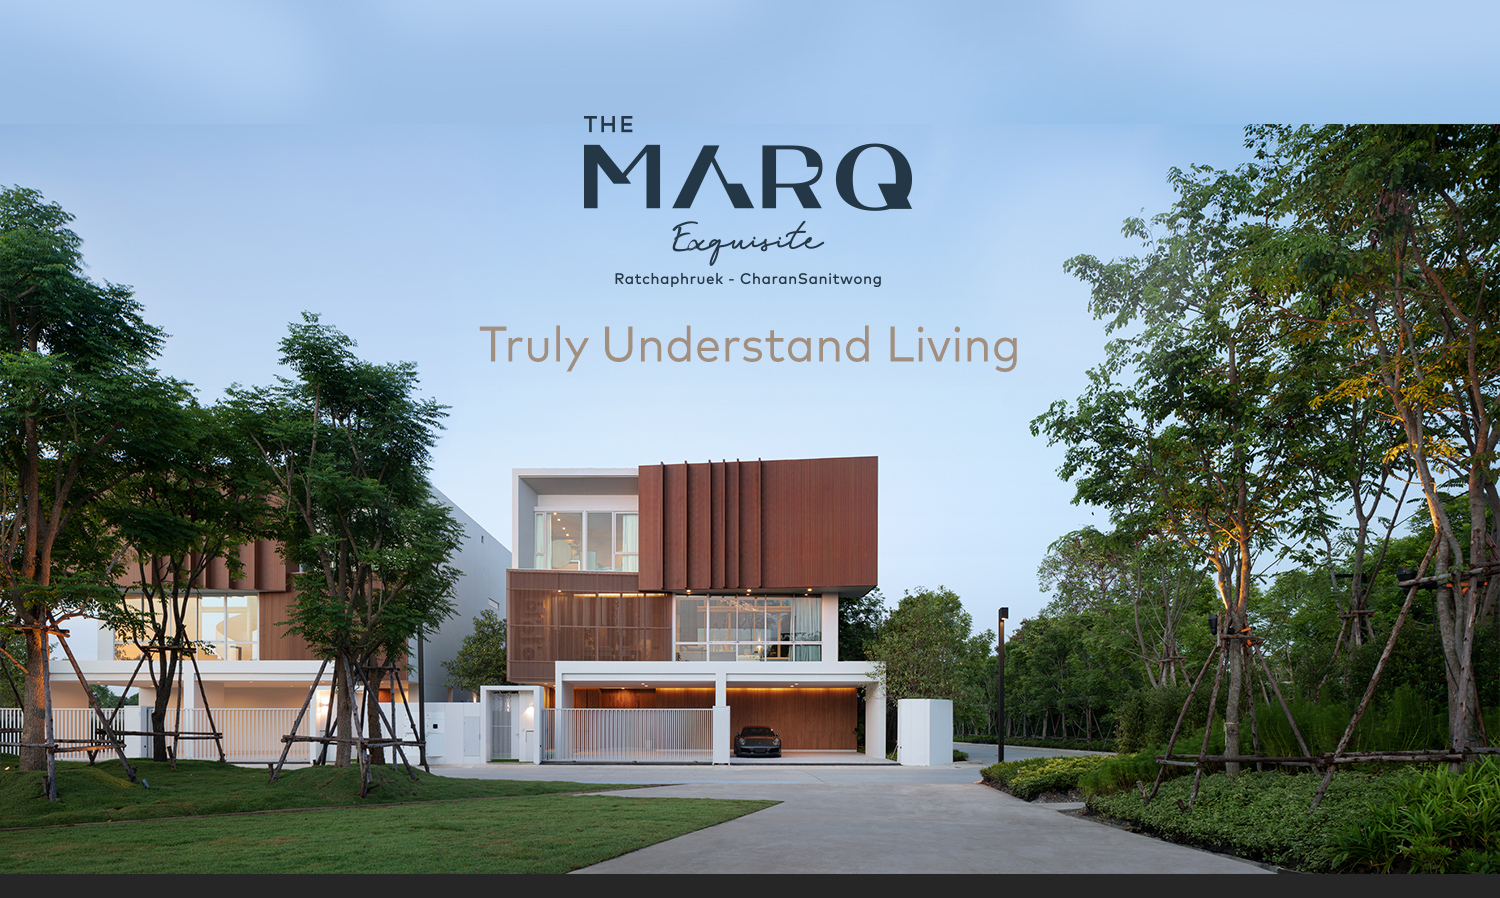 The MARQ Exquisite ราชพฤกษ์ - จรัญสนิทวงศ์ บ้านเดี่ยวระดับลักซ์ชัวรี่ ผสานแนวคิดนักจัดบ้านระดับโลก